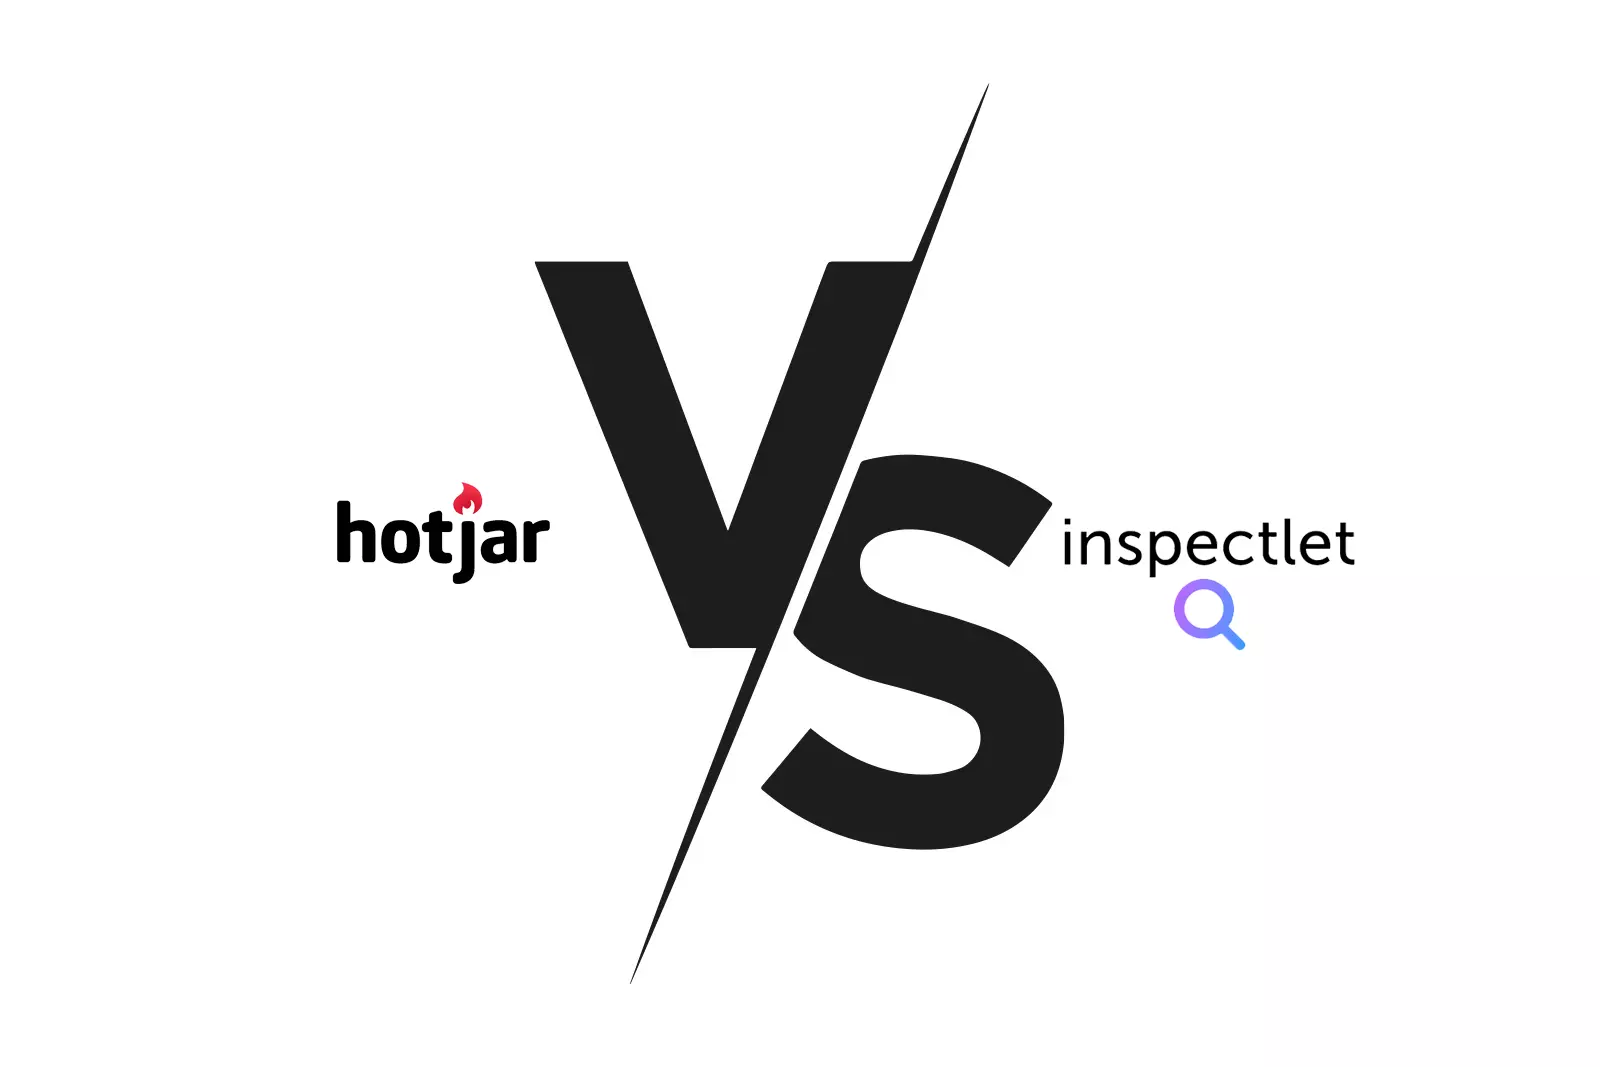 We Tried Hotjar vs Inspectlet: Here’s Our Feedback